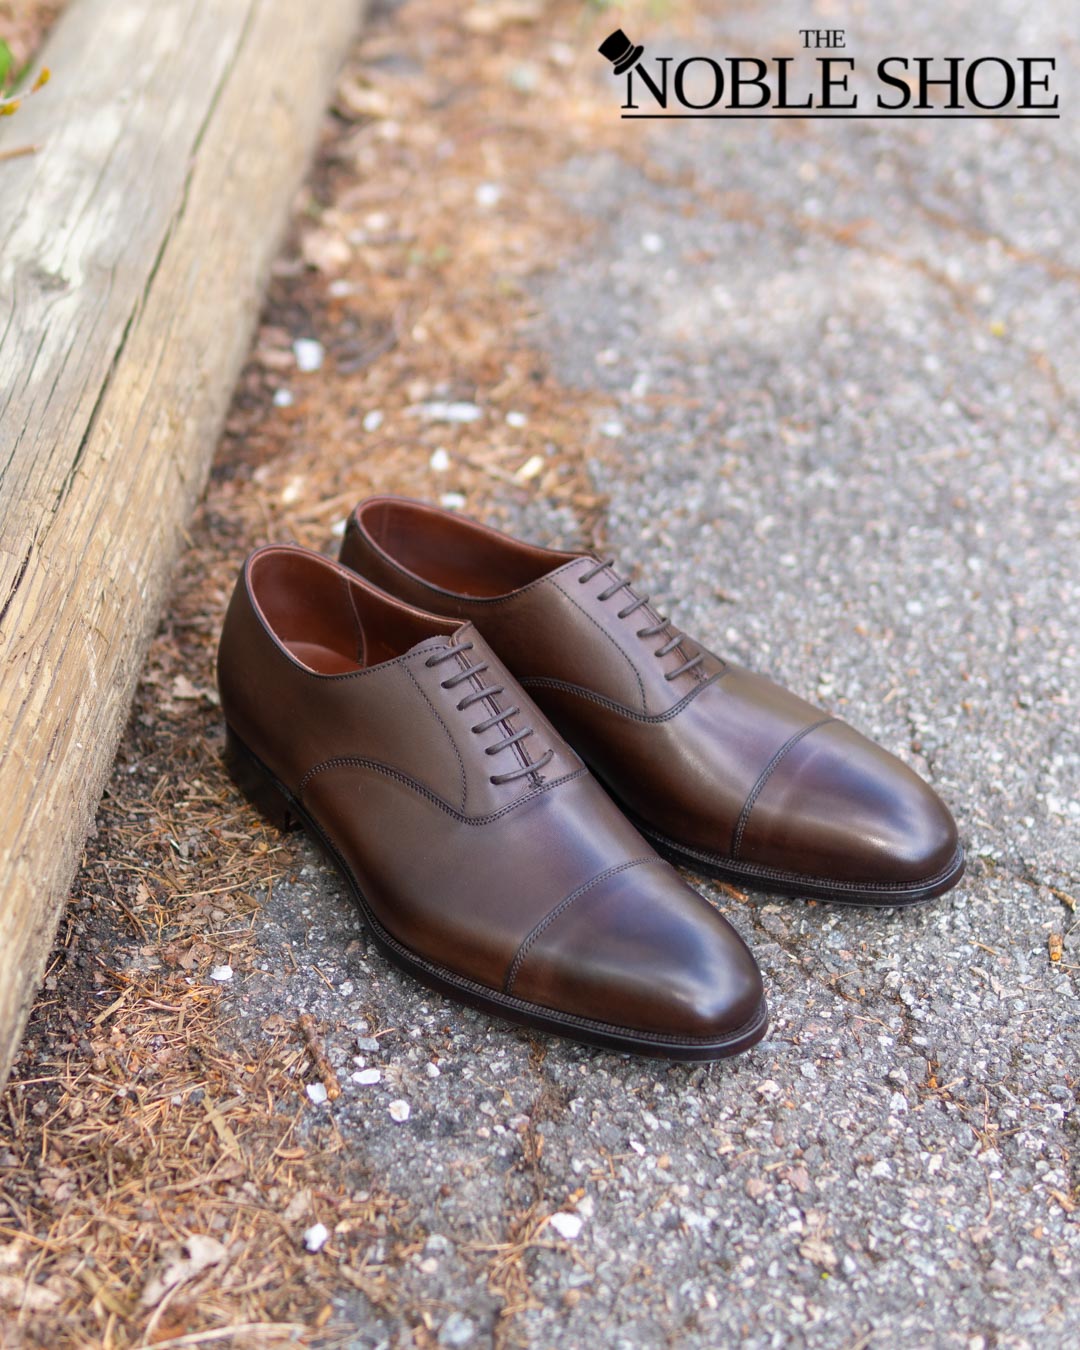 Crockett & Jones Lonsdale Handgrade Oxford in Dark Brown Calf for The Noble Shoe